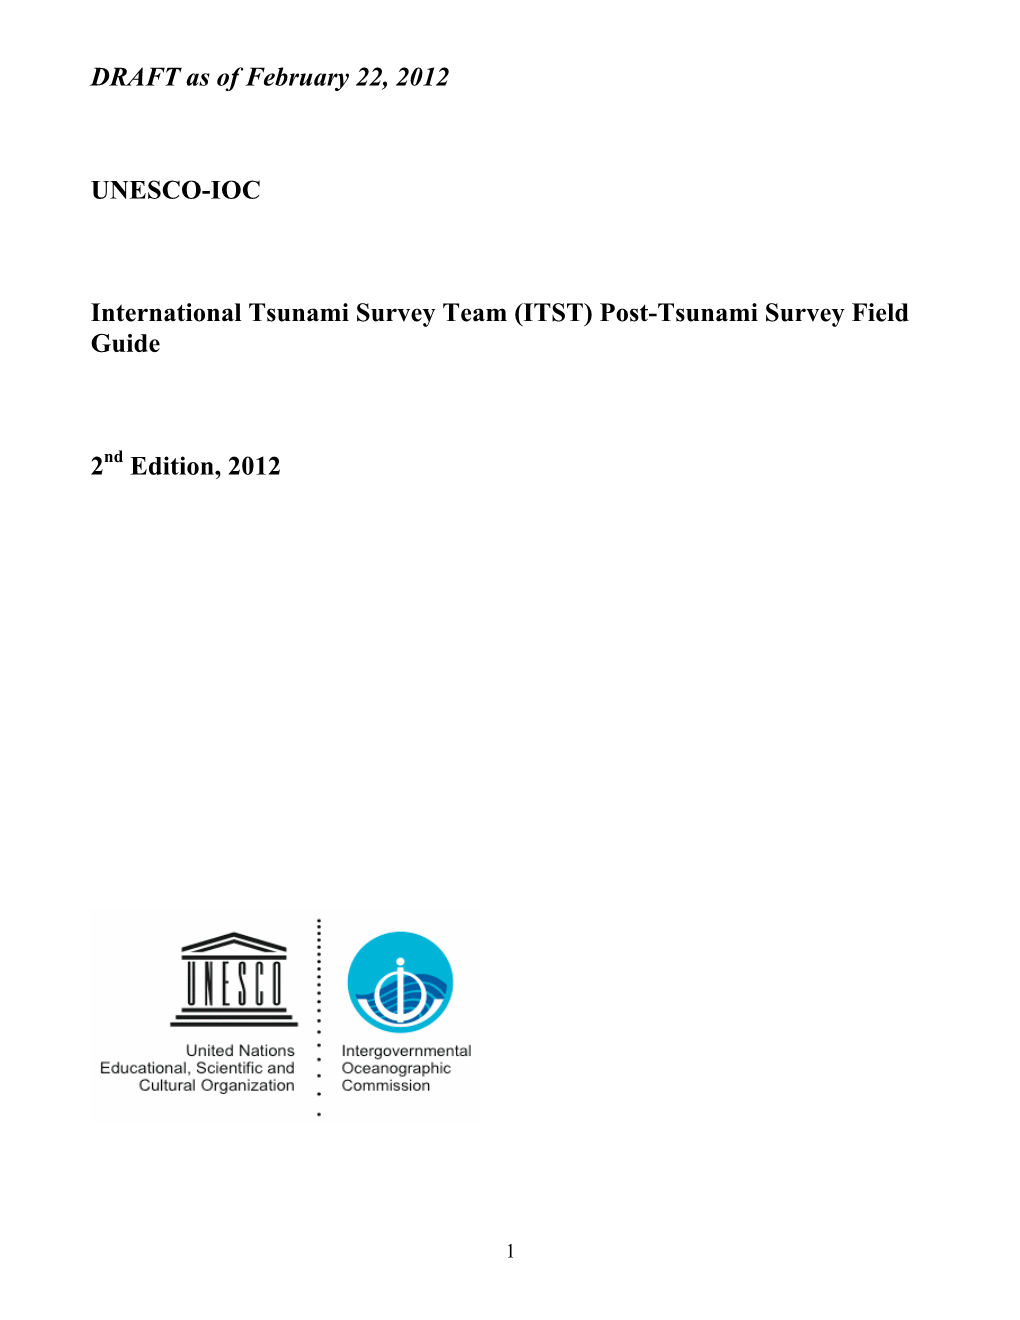 DRAFT As of February 22, 2012 UNESCO-IOC International